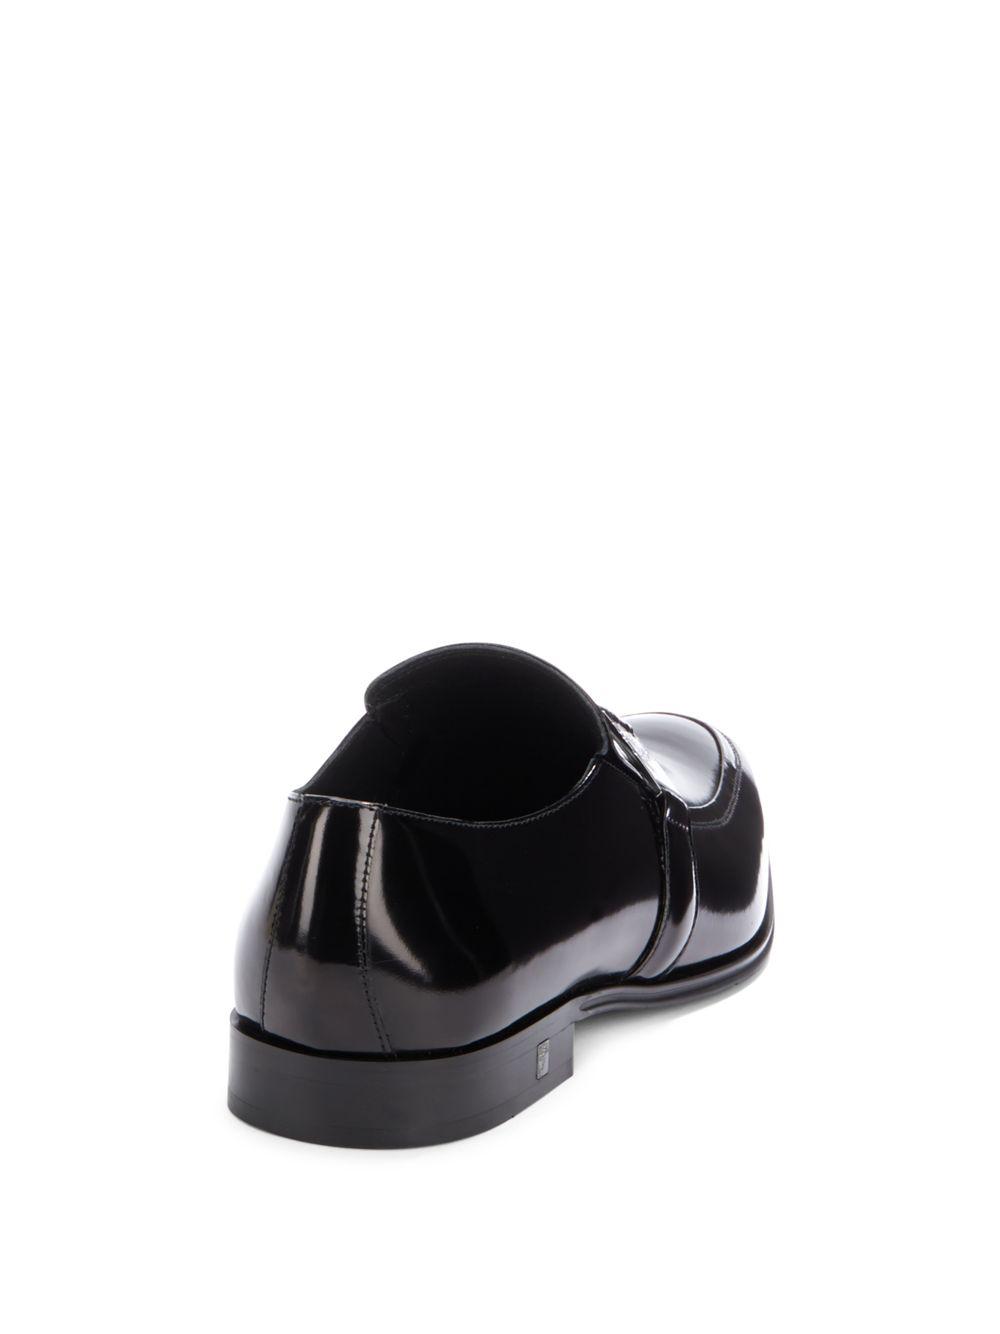 Versace Black Dress Shoes Discount | bellvalefarms.com